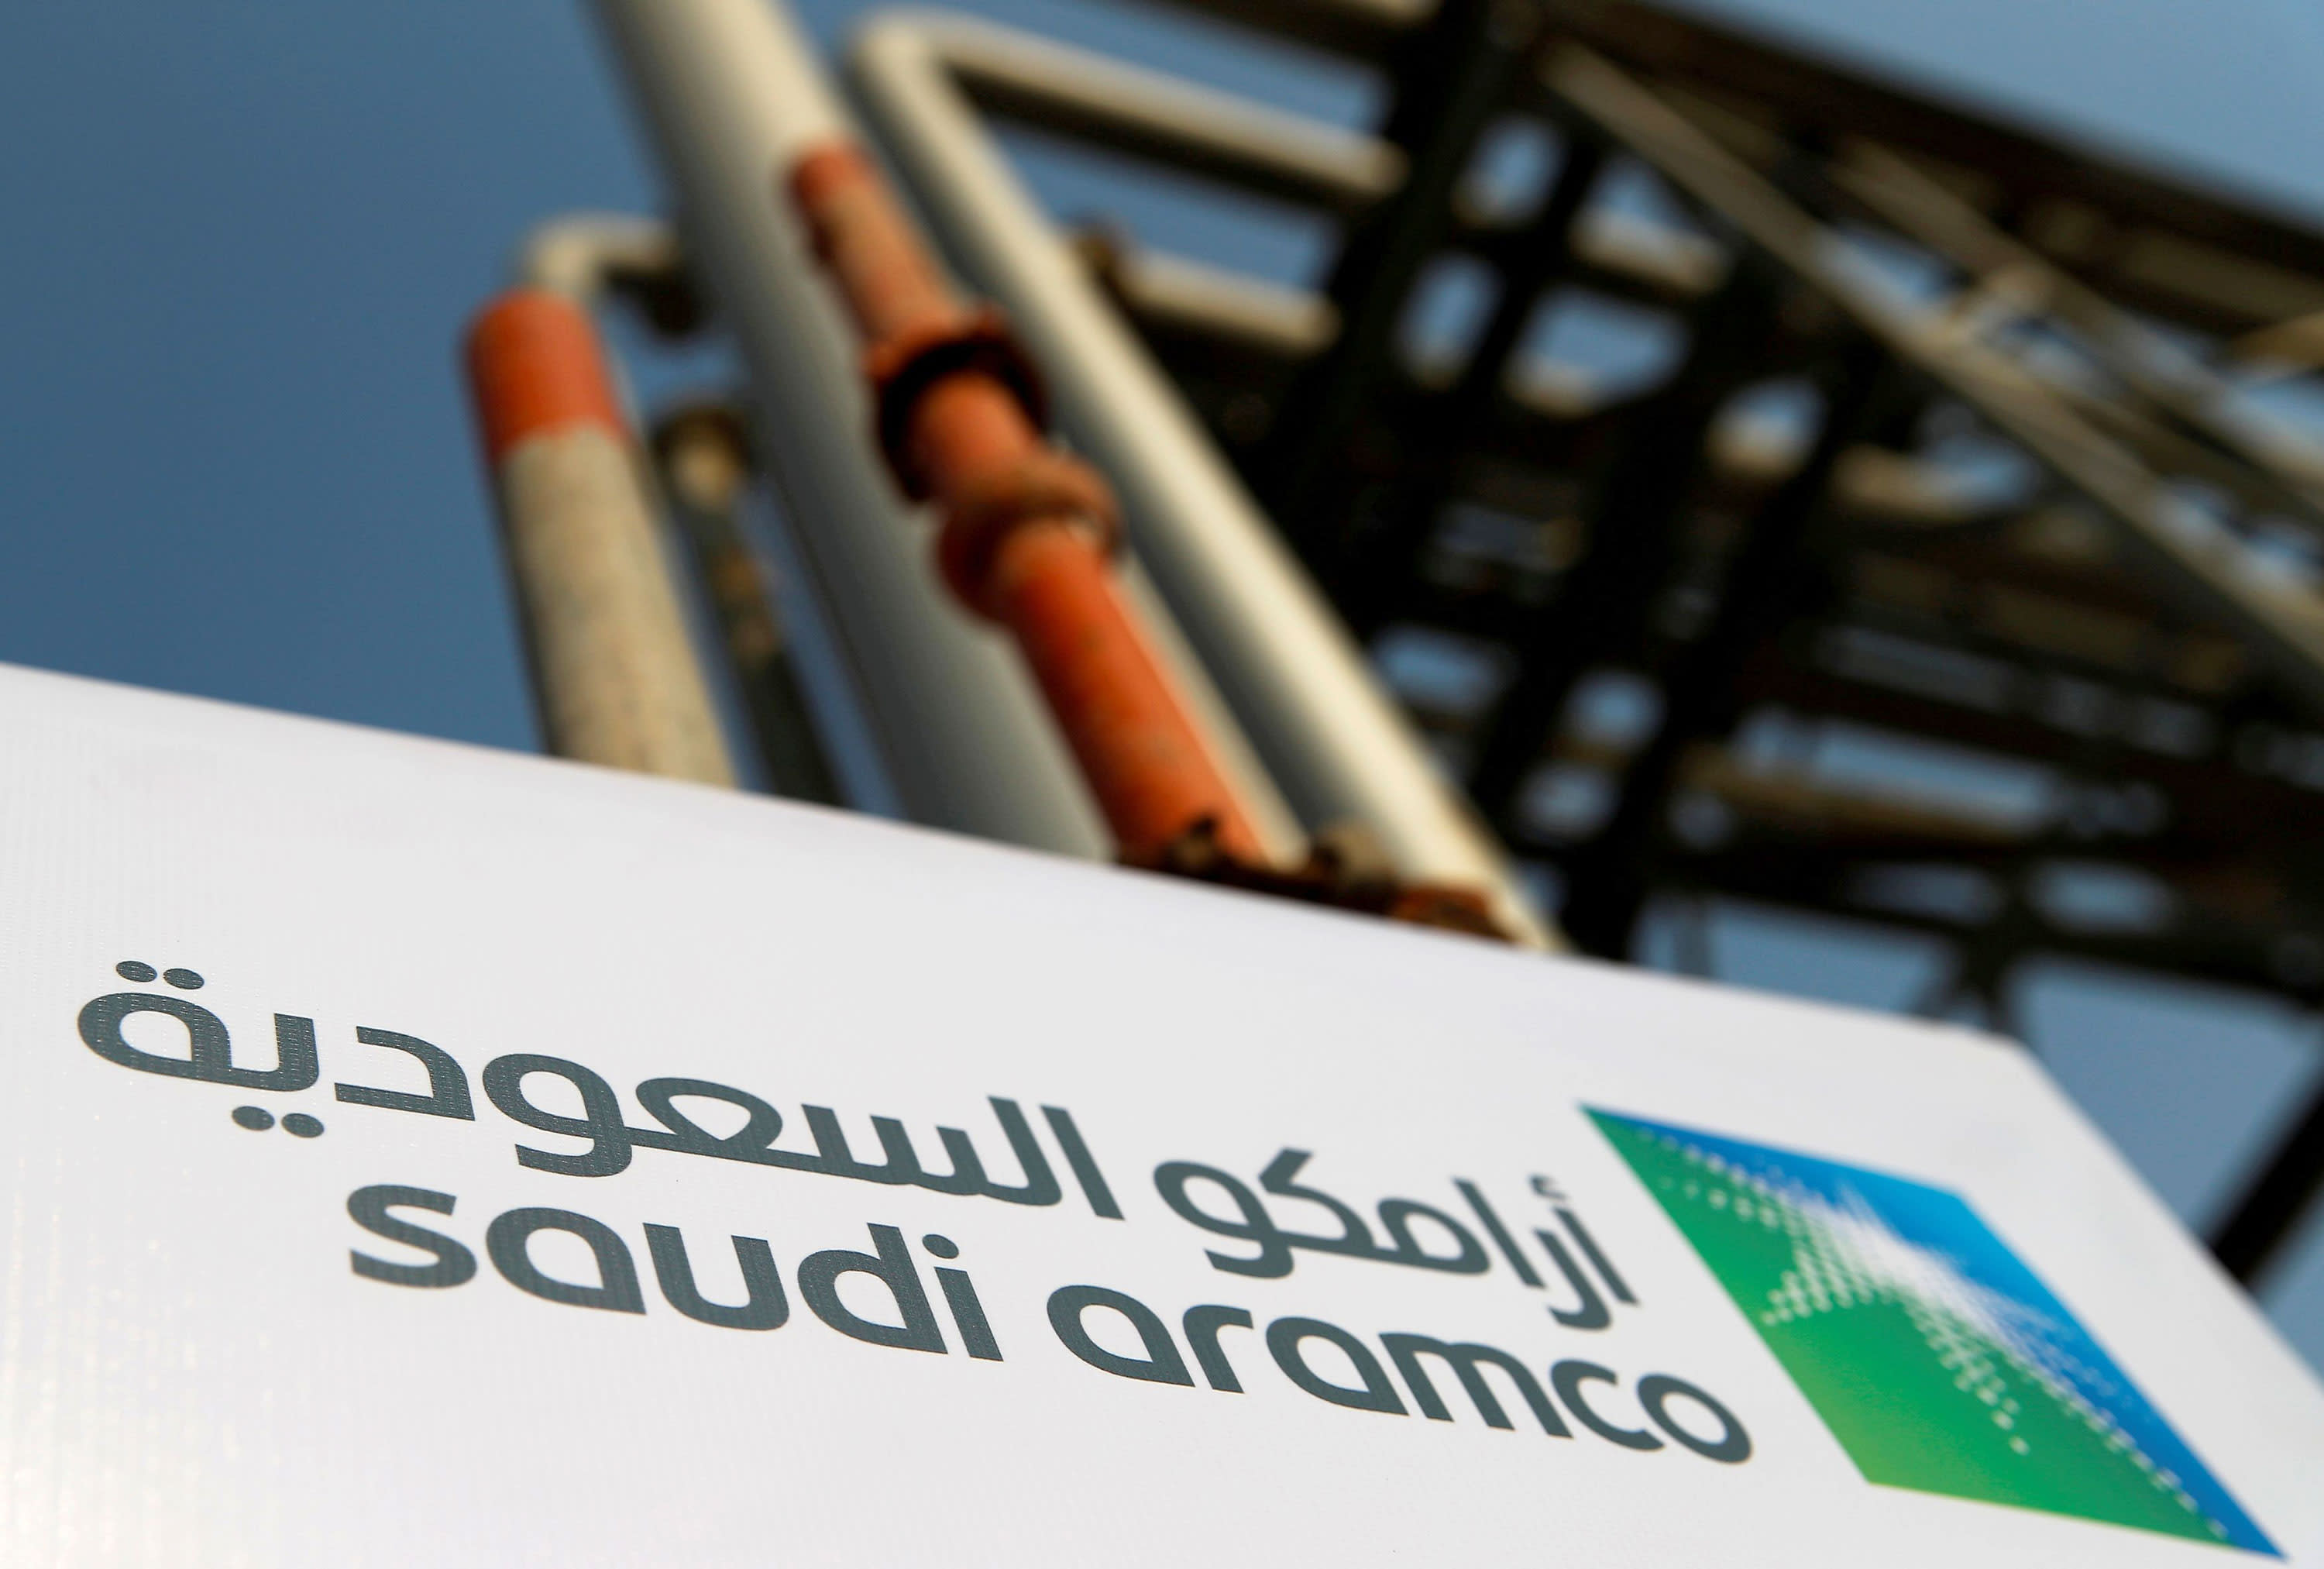 Oil giant Saudi Aramco’s profit slides 23% in third quarter on lower crude prices, volumes